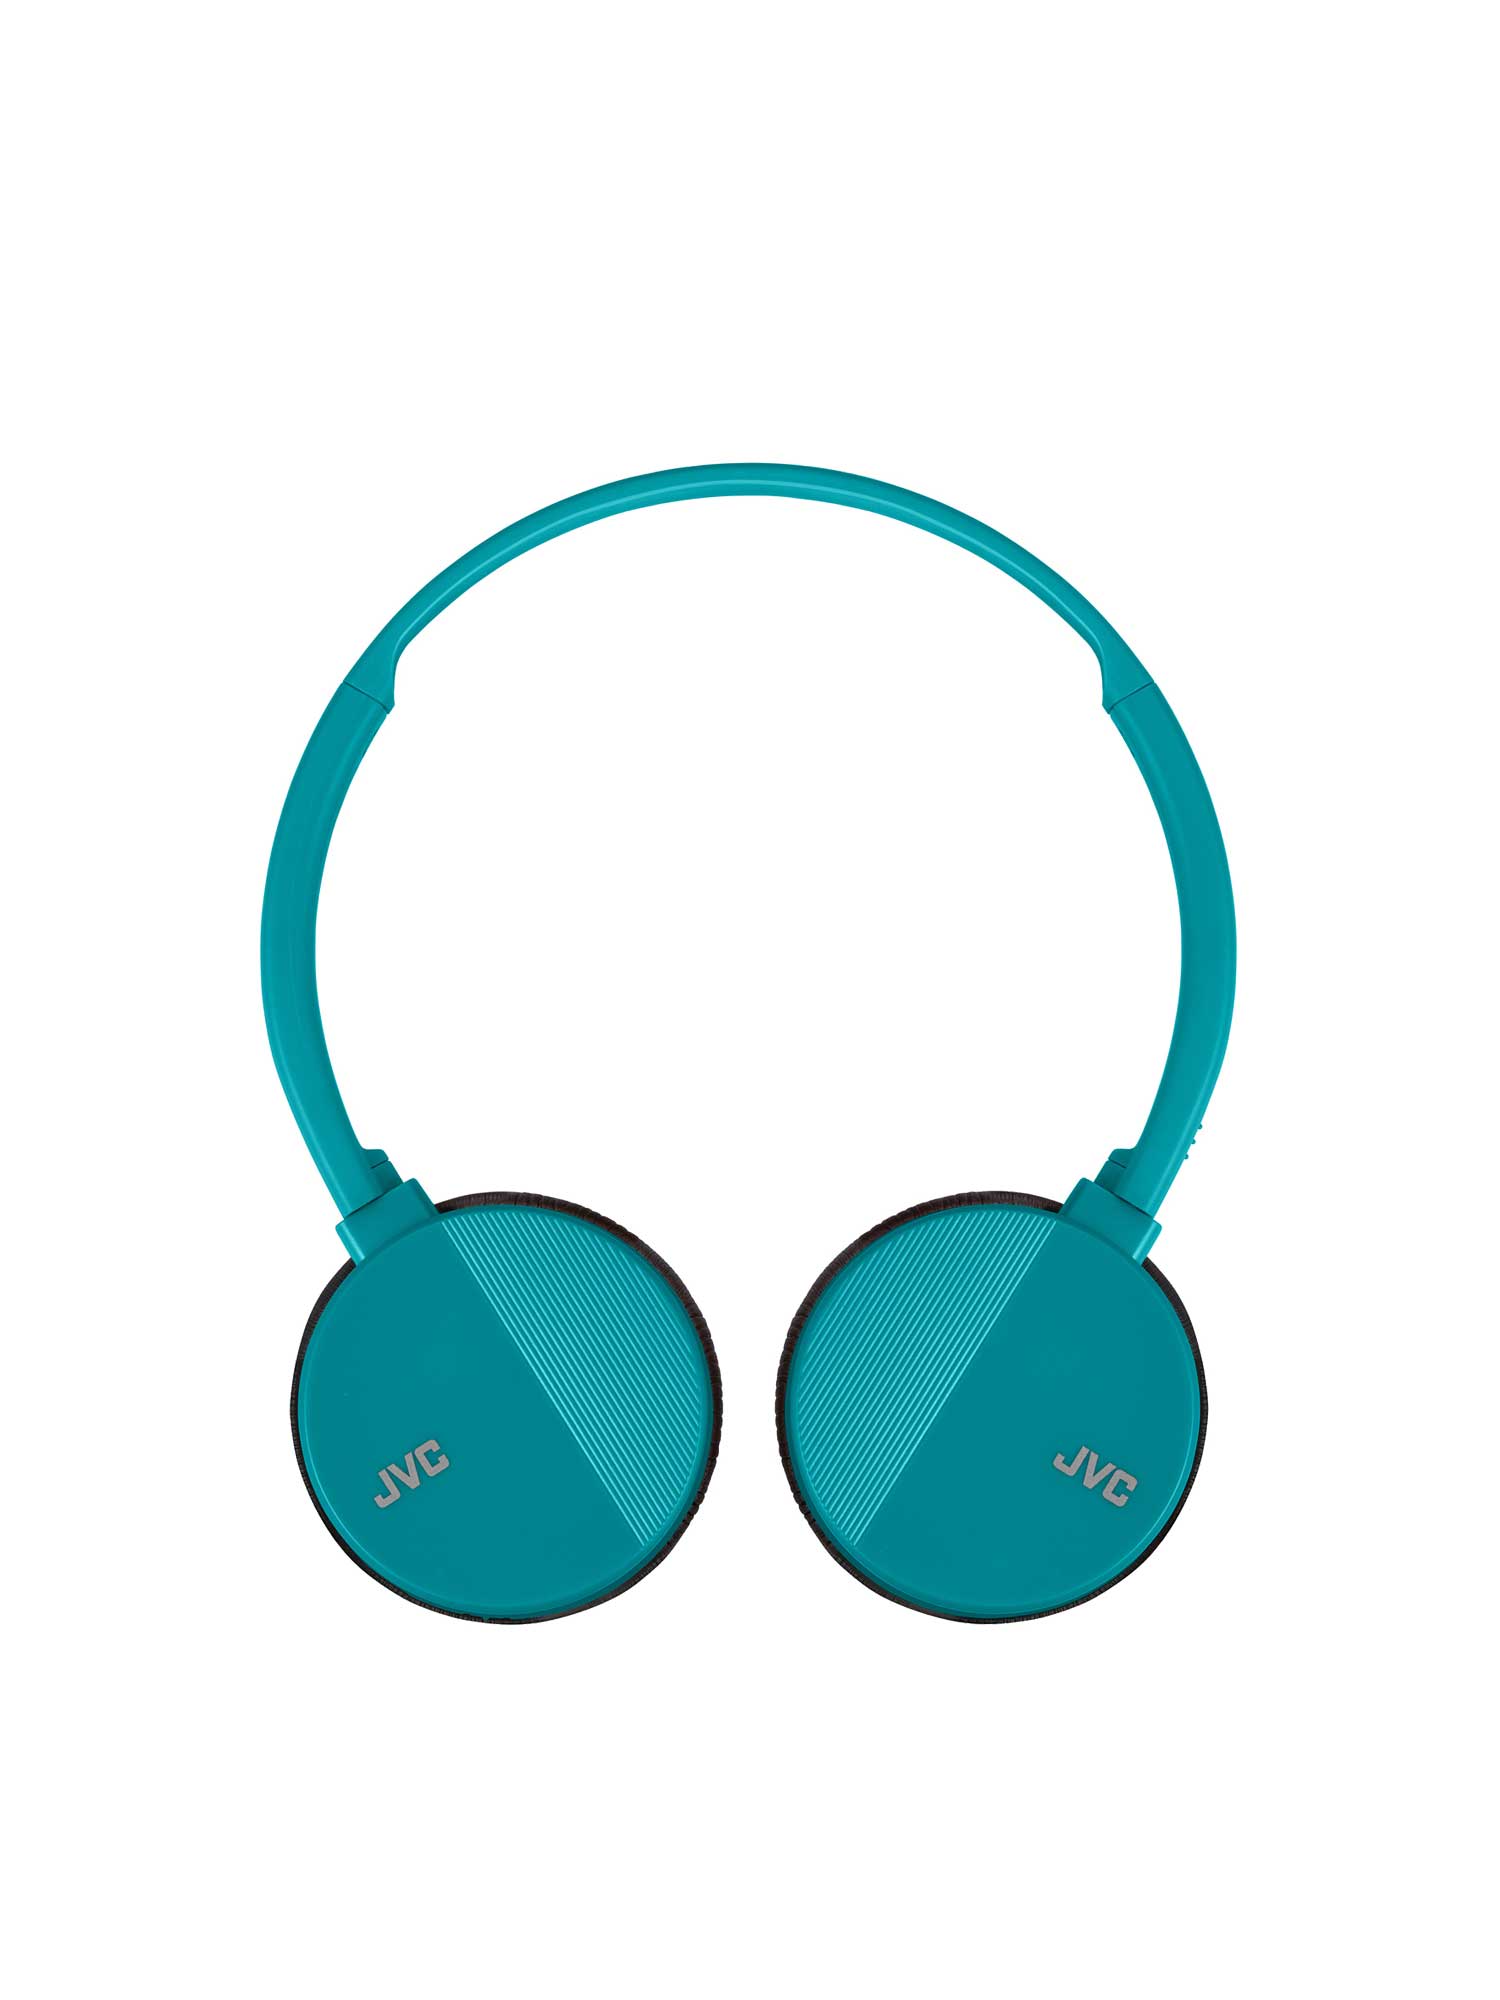 HA-S24W-Z in turquoise Bluetooth headphones swivel design